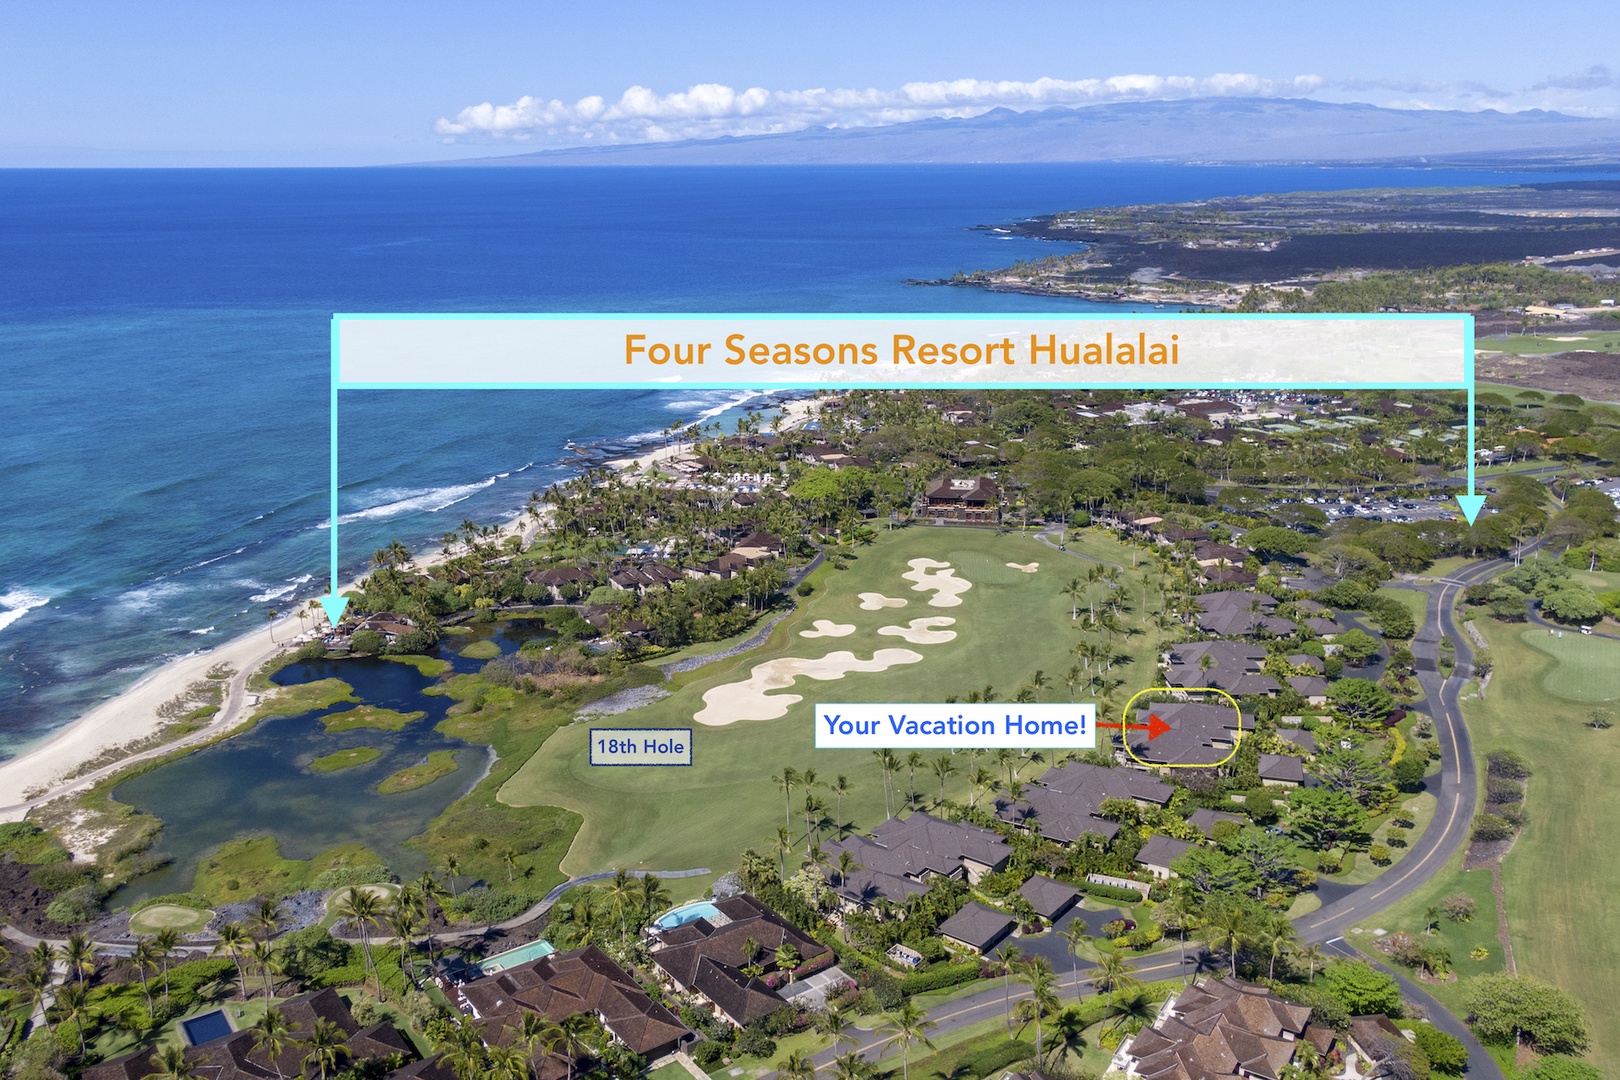 Kailua Kona Vacation Rentals, 3BD Golf Villa (3101) at Four Seasons Resort at Hualalai - Map to demonstrate the proximity of your villa rental to resort center.